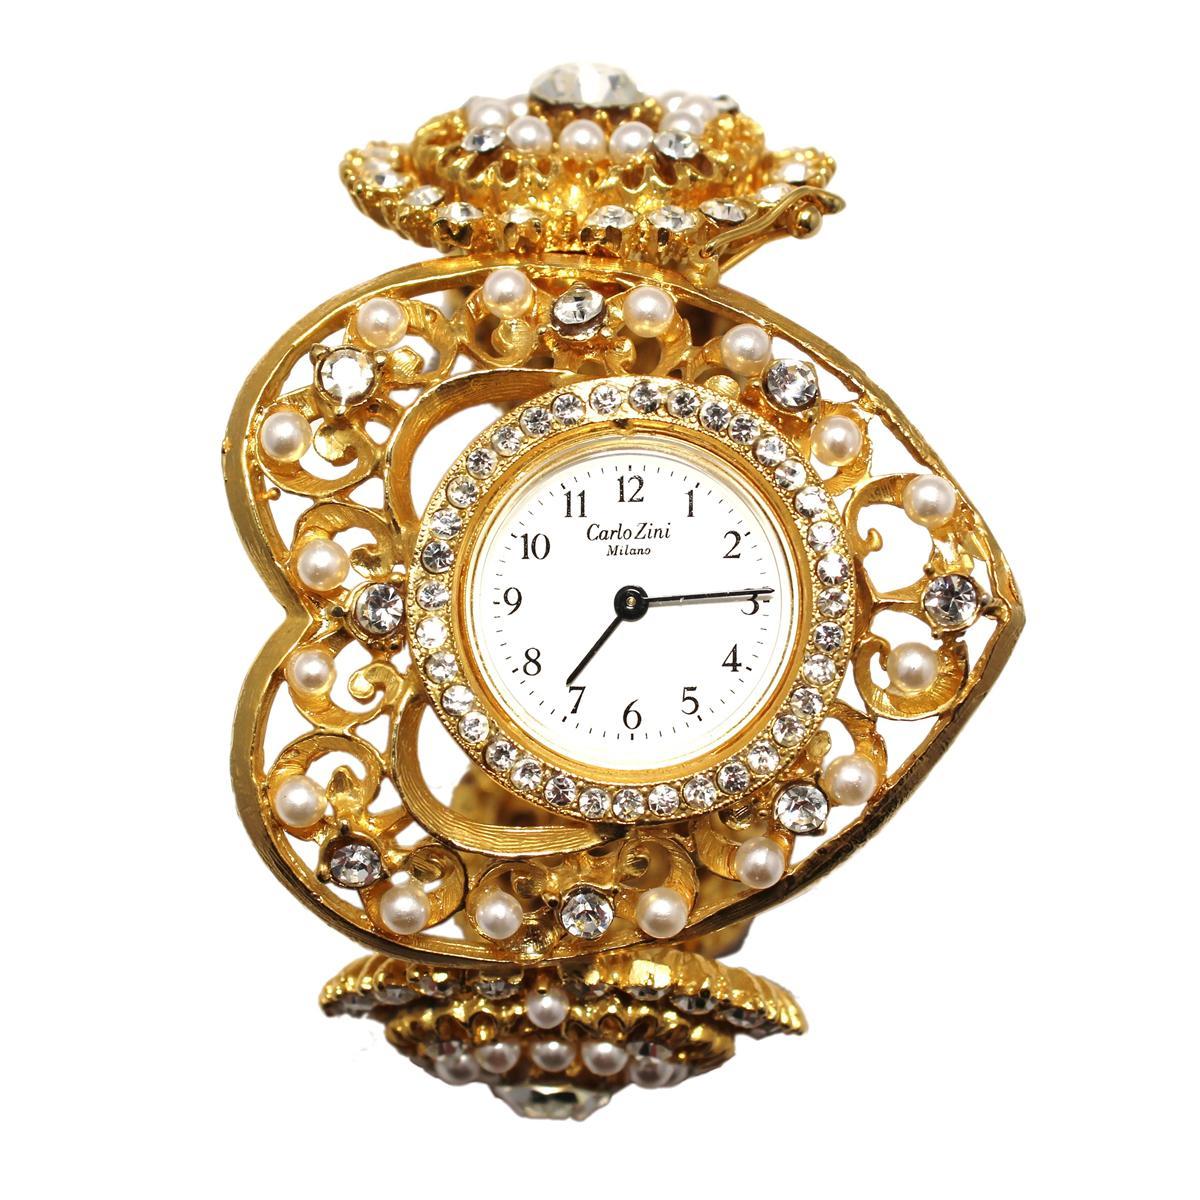 Carlo Zini Golden Heart Jewel Watch